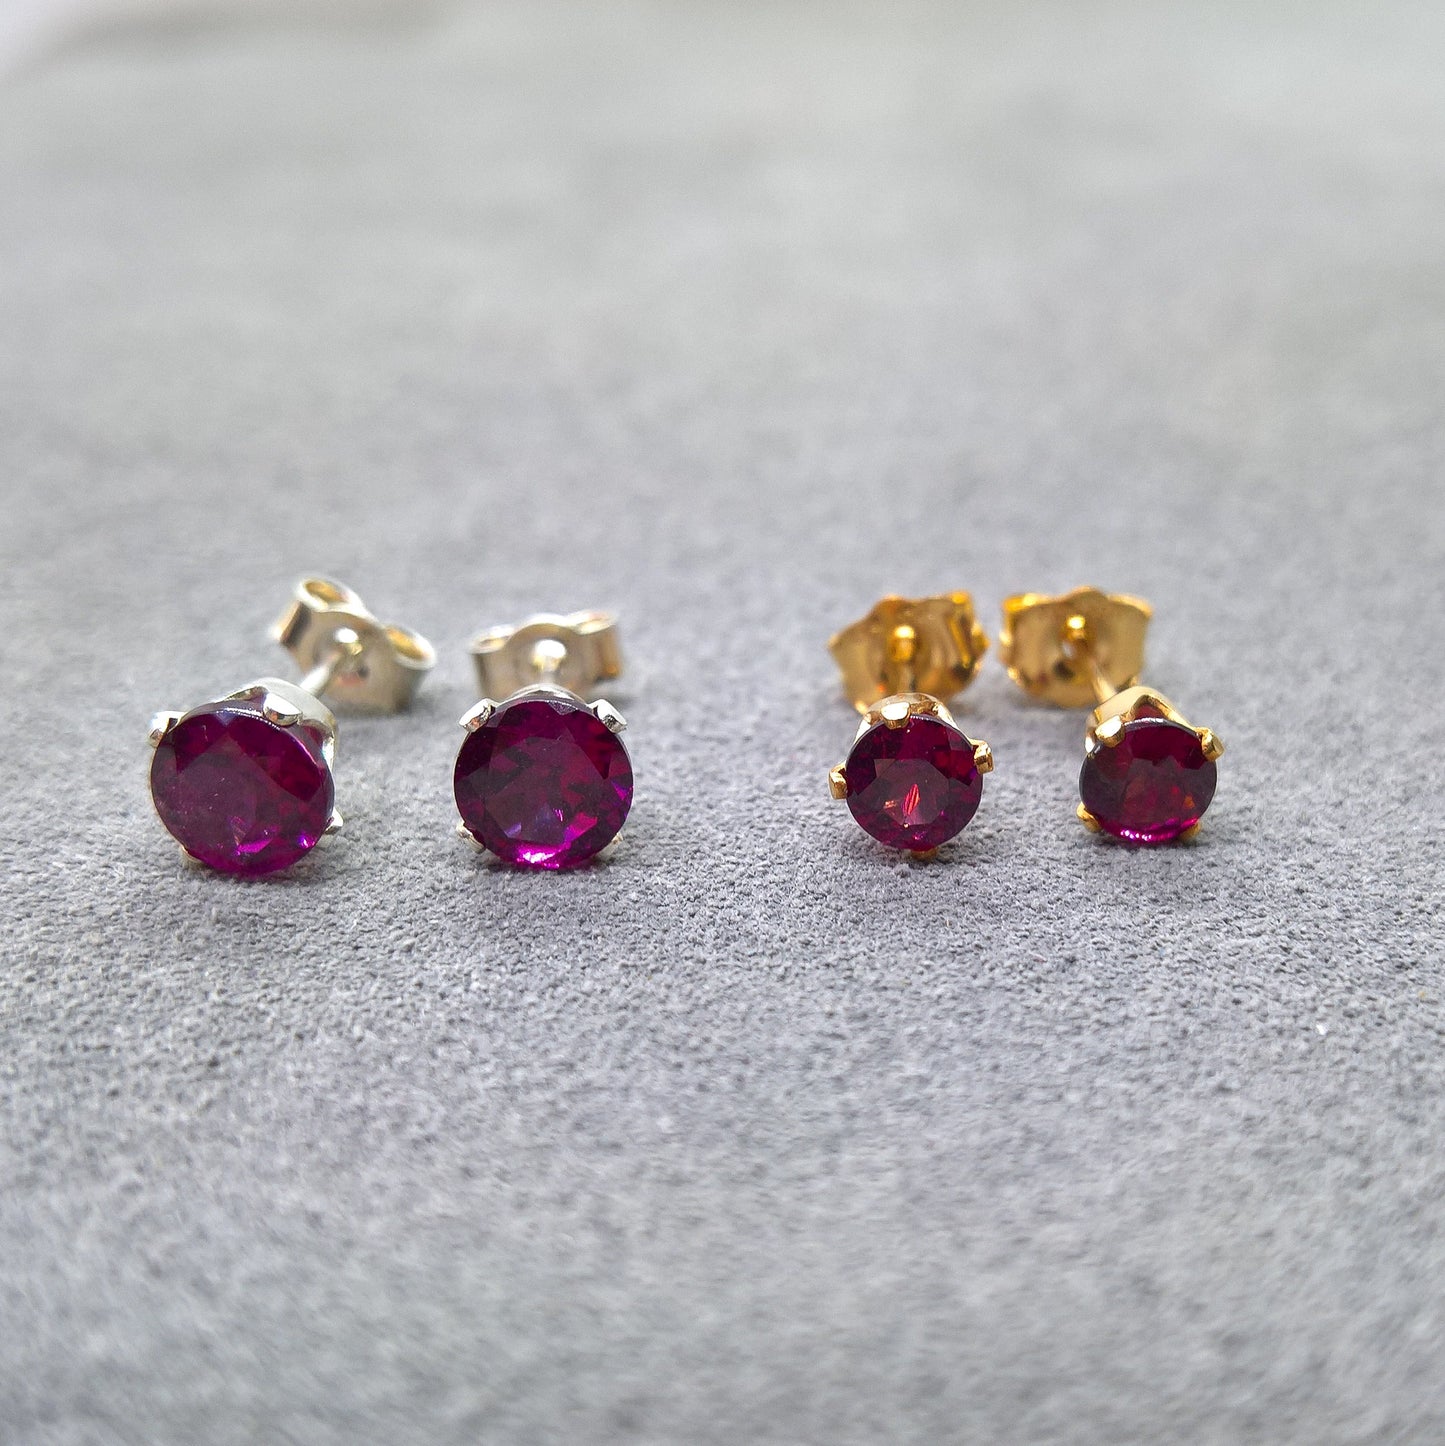 Rhodolite Garnet stud earrings in gold filled or sterling silver